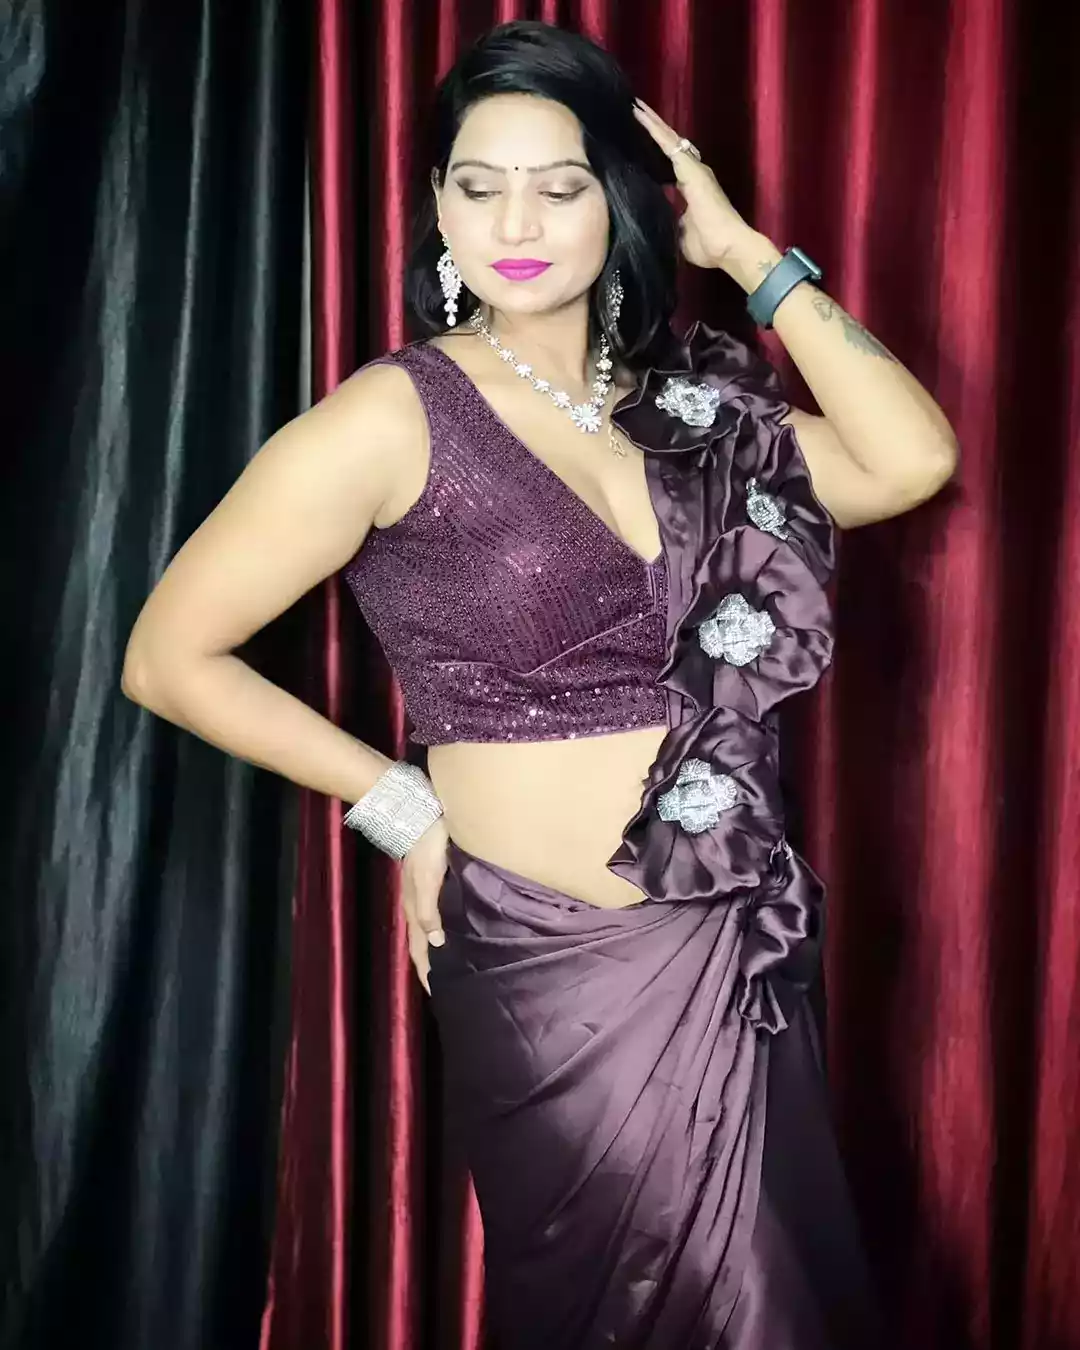 Drishti mishra enjoy the experience fun housewives india escorts